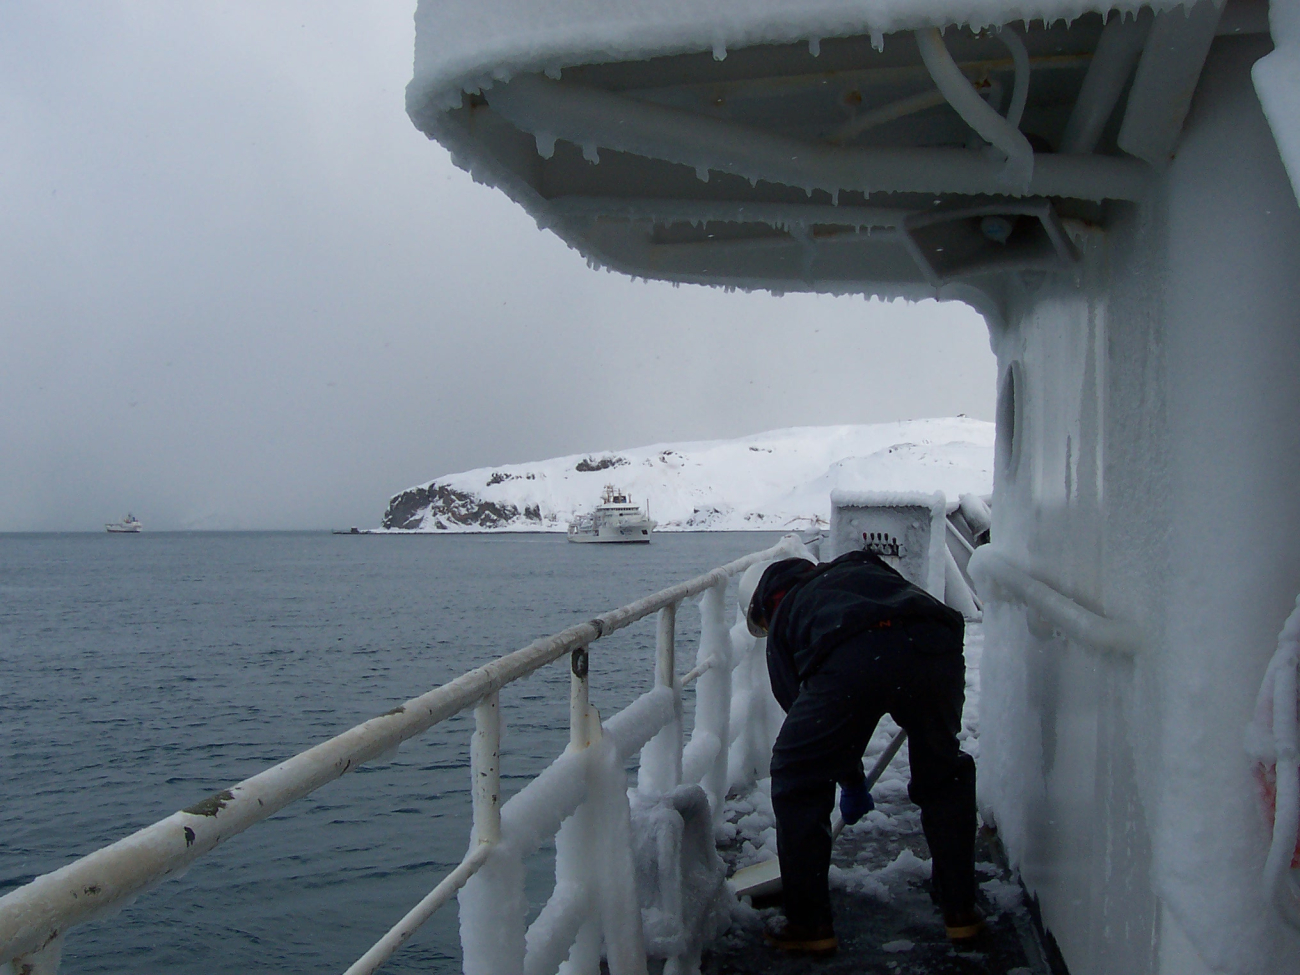 NOAA Ship MILLER FREEMAN entering Kodiak Harbor